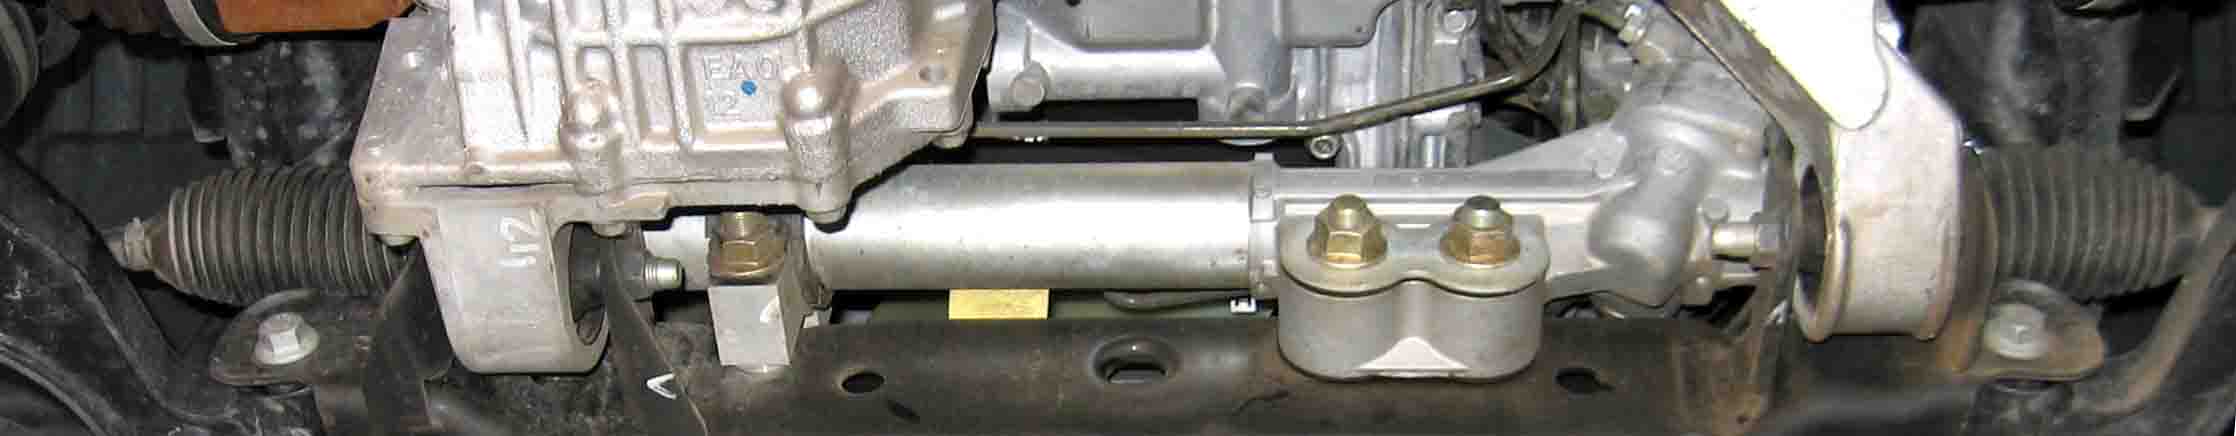 Nissan power steering issues #2